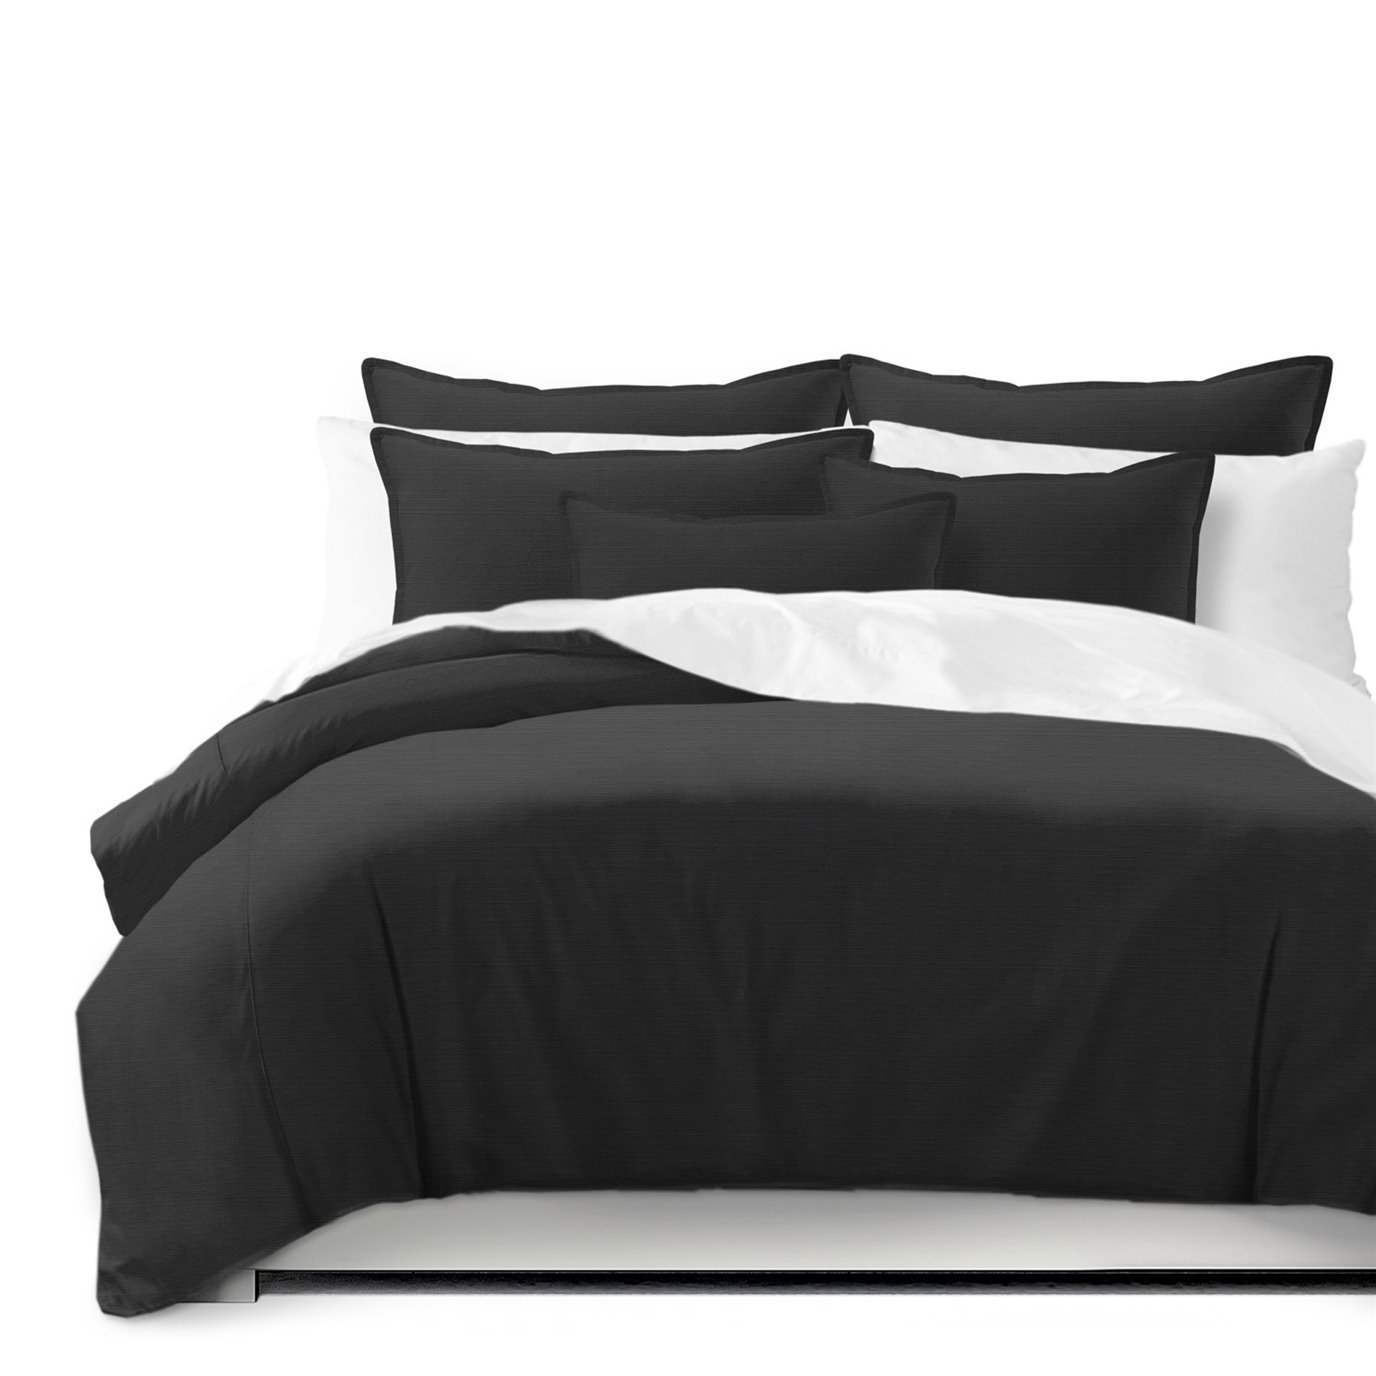 Nova Black Comforter and Pillow Sham(s) Set - Size Full